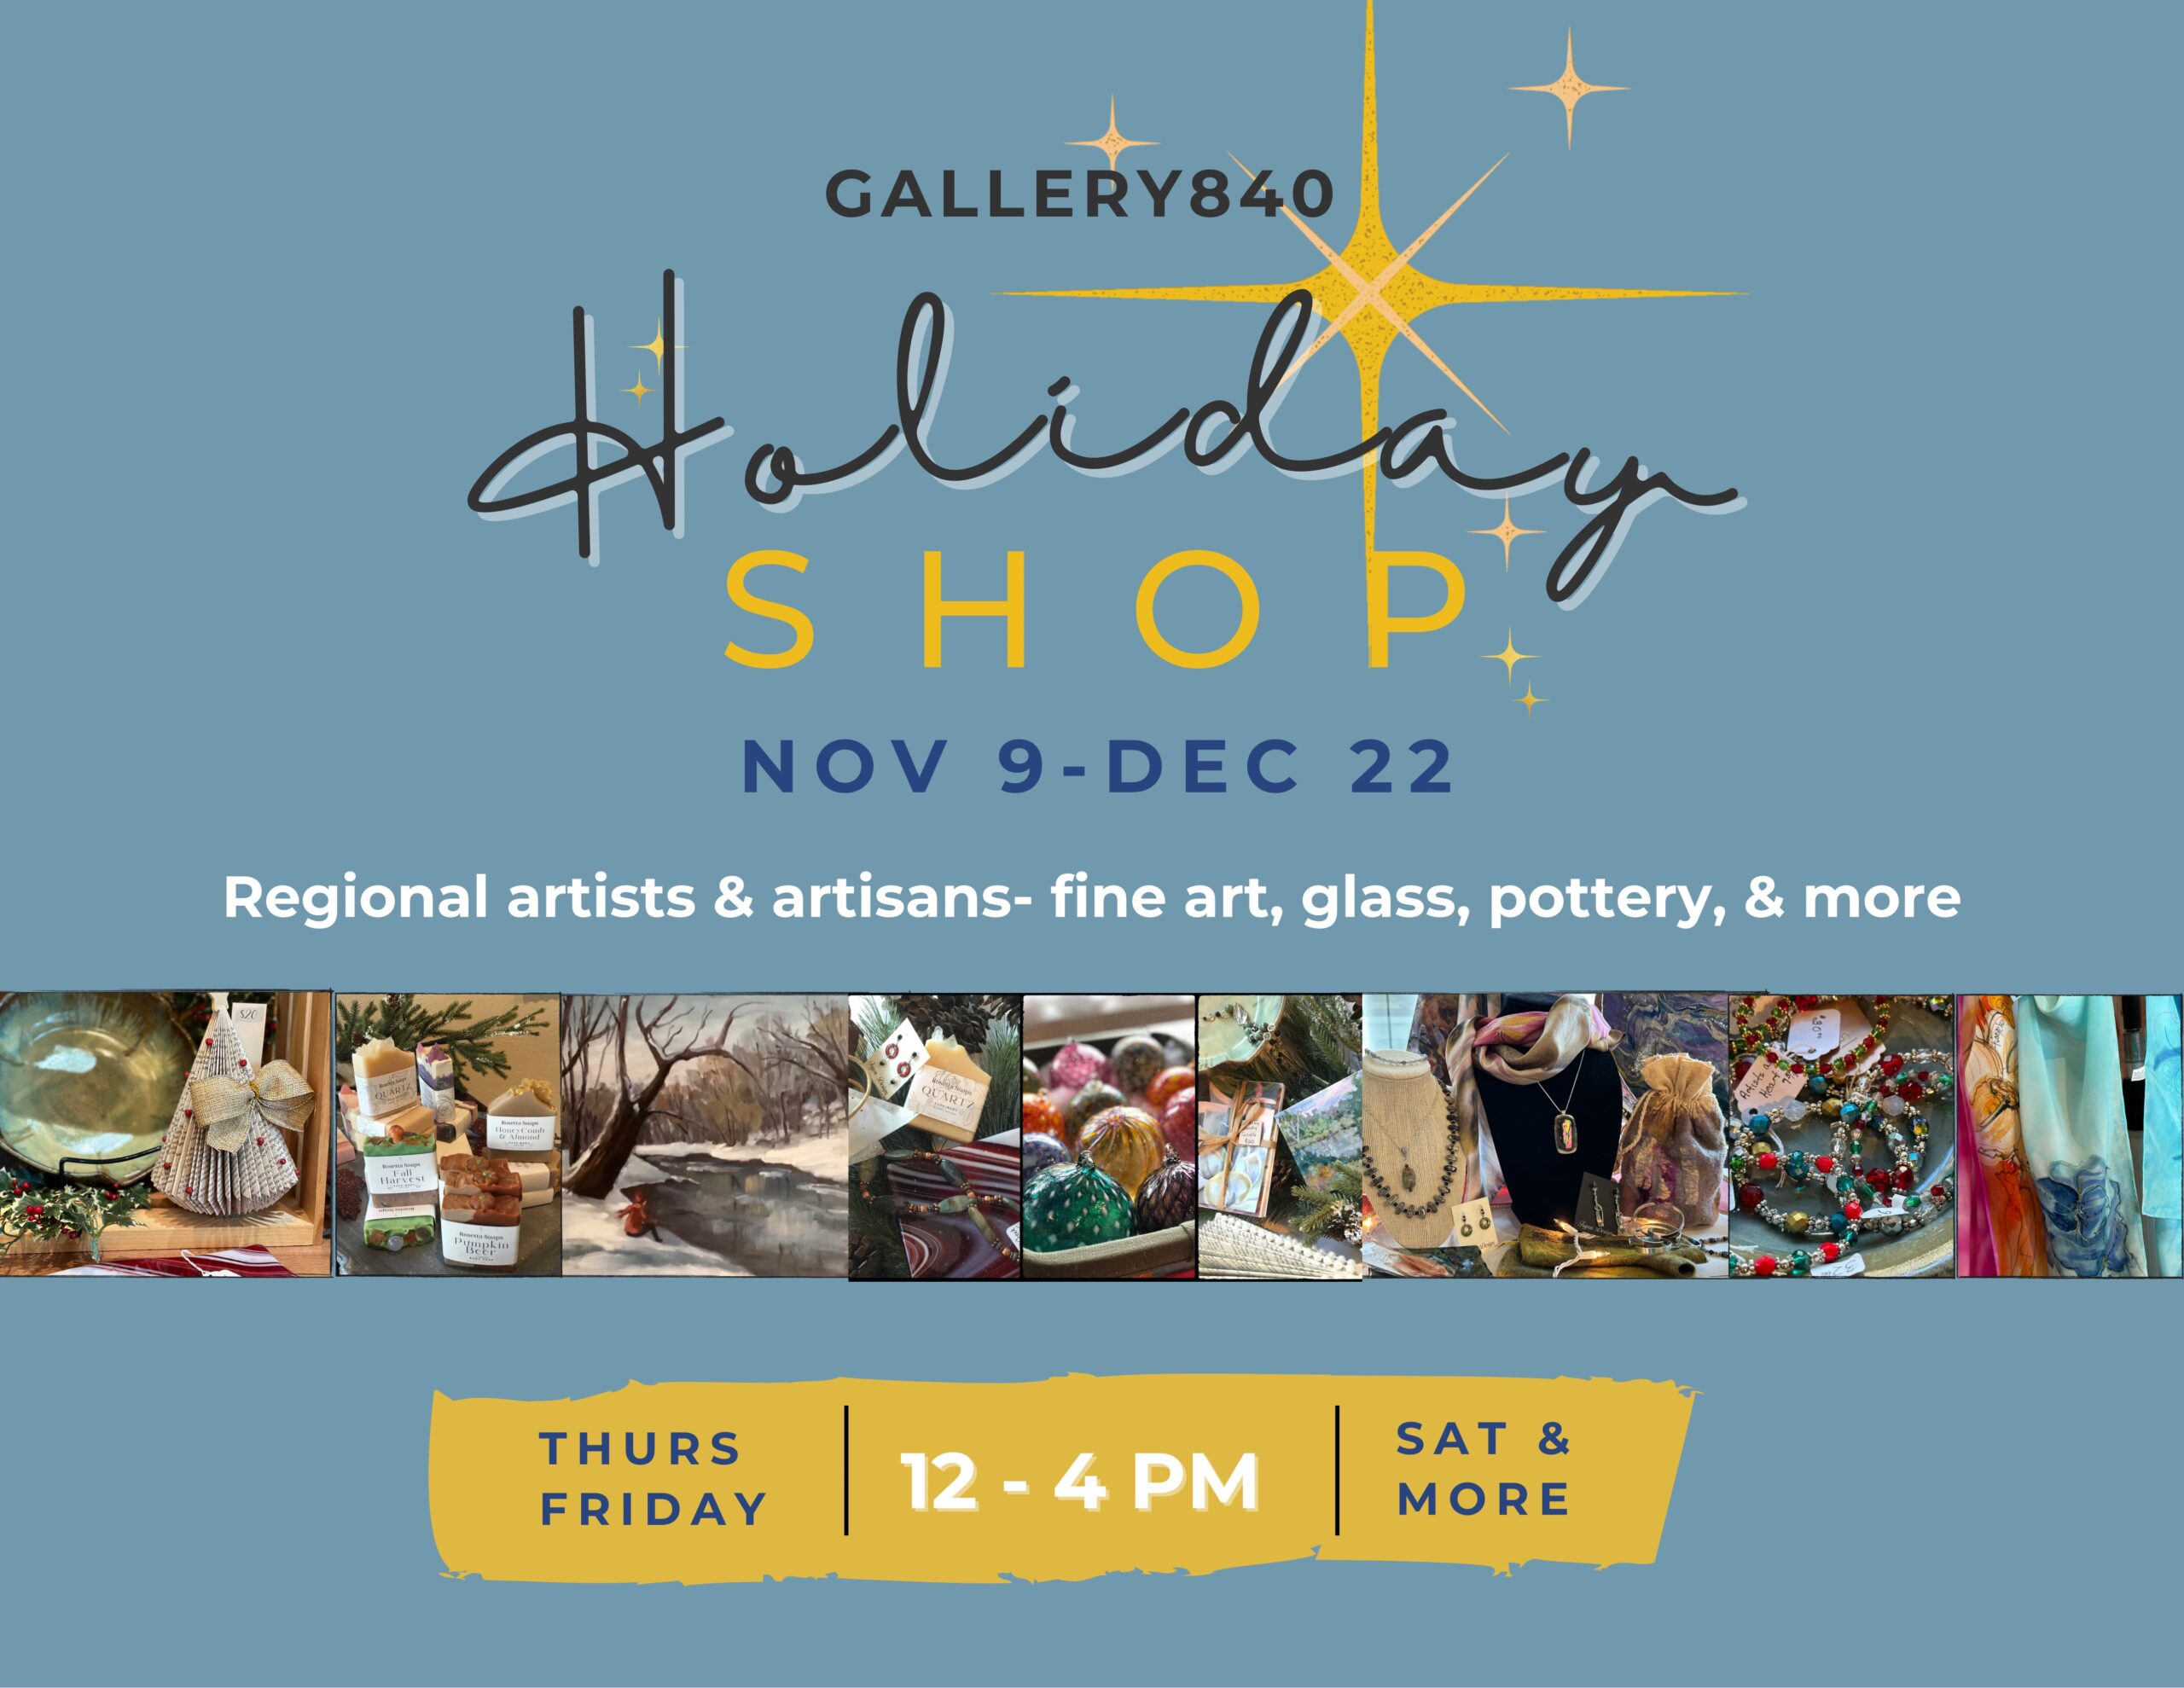 Gallery840 Christmas Shop      Thurs-Sat 12-4       Thru Dec 22